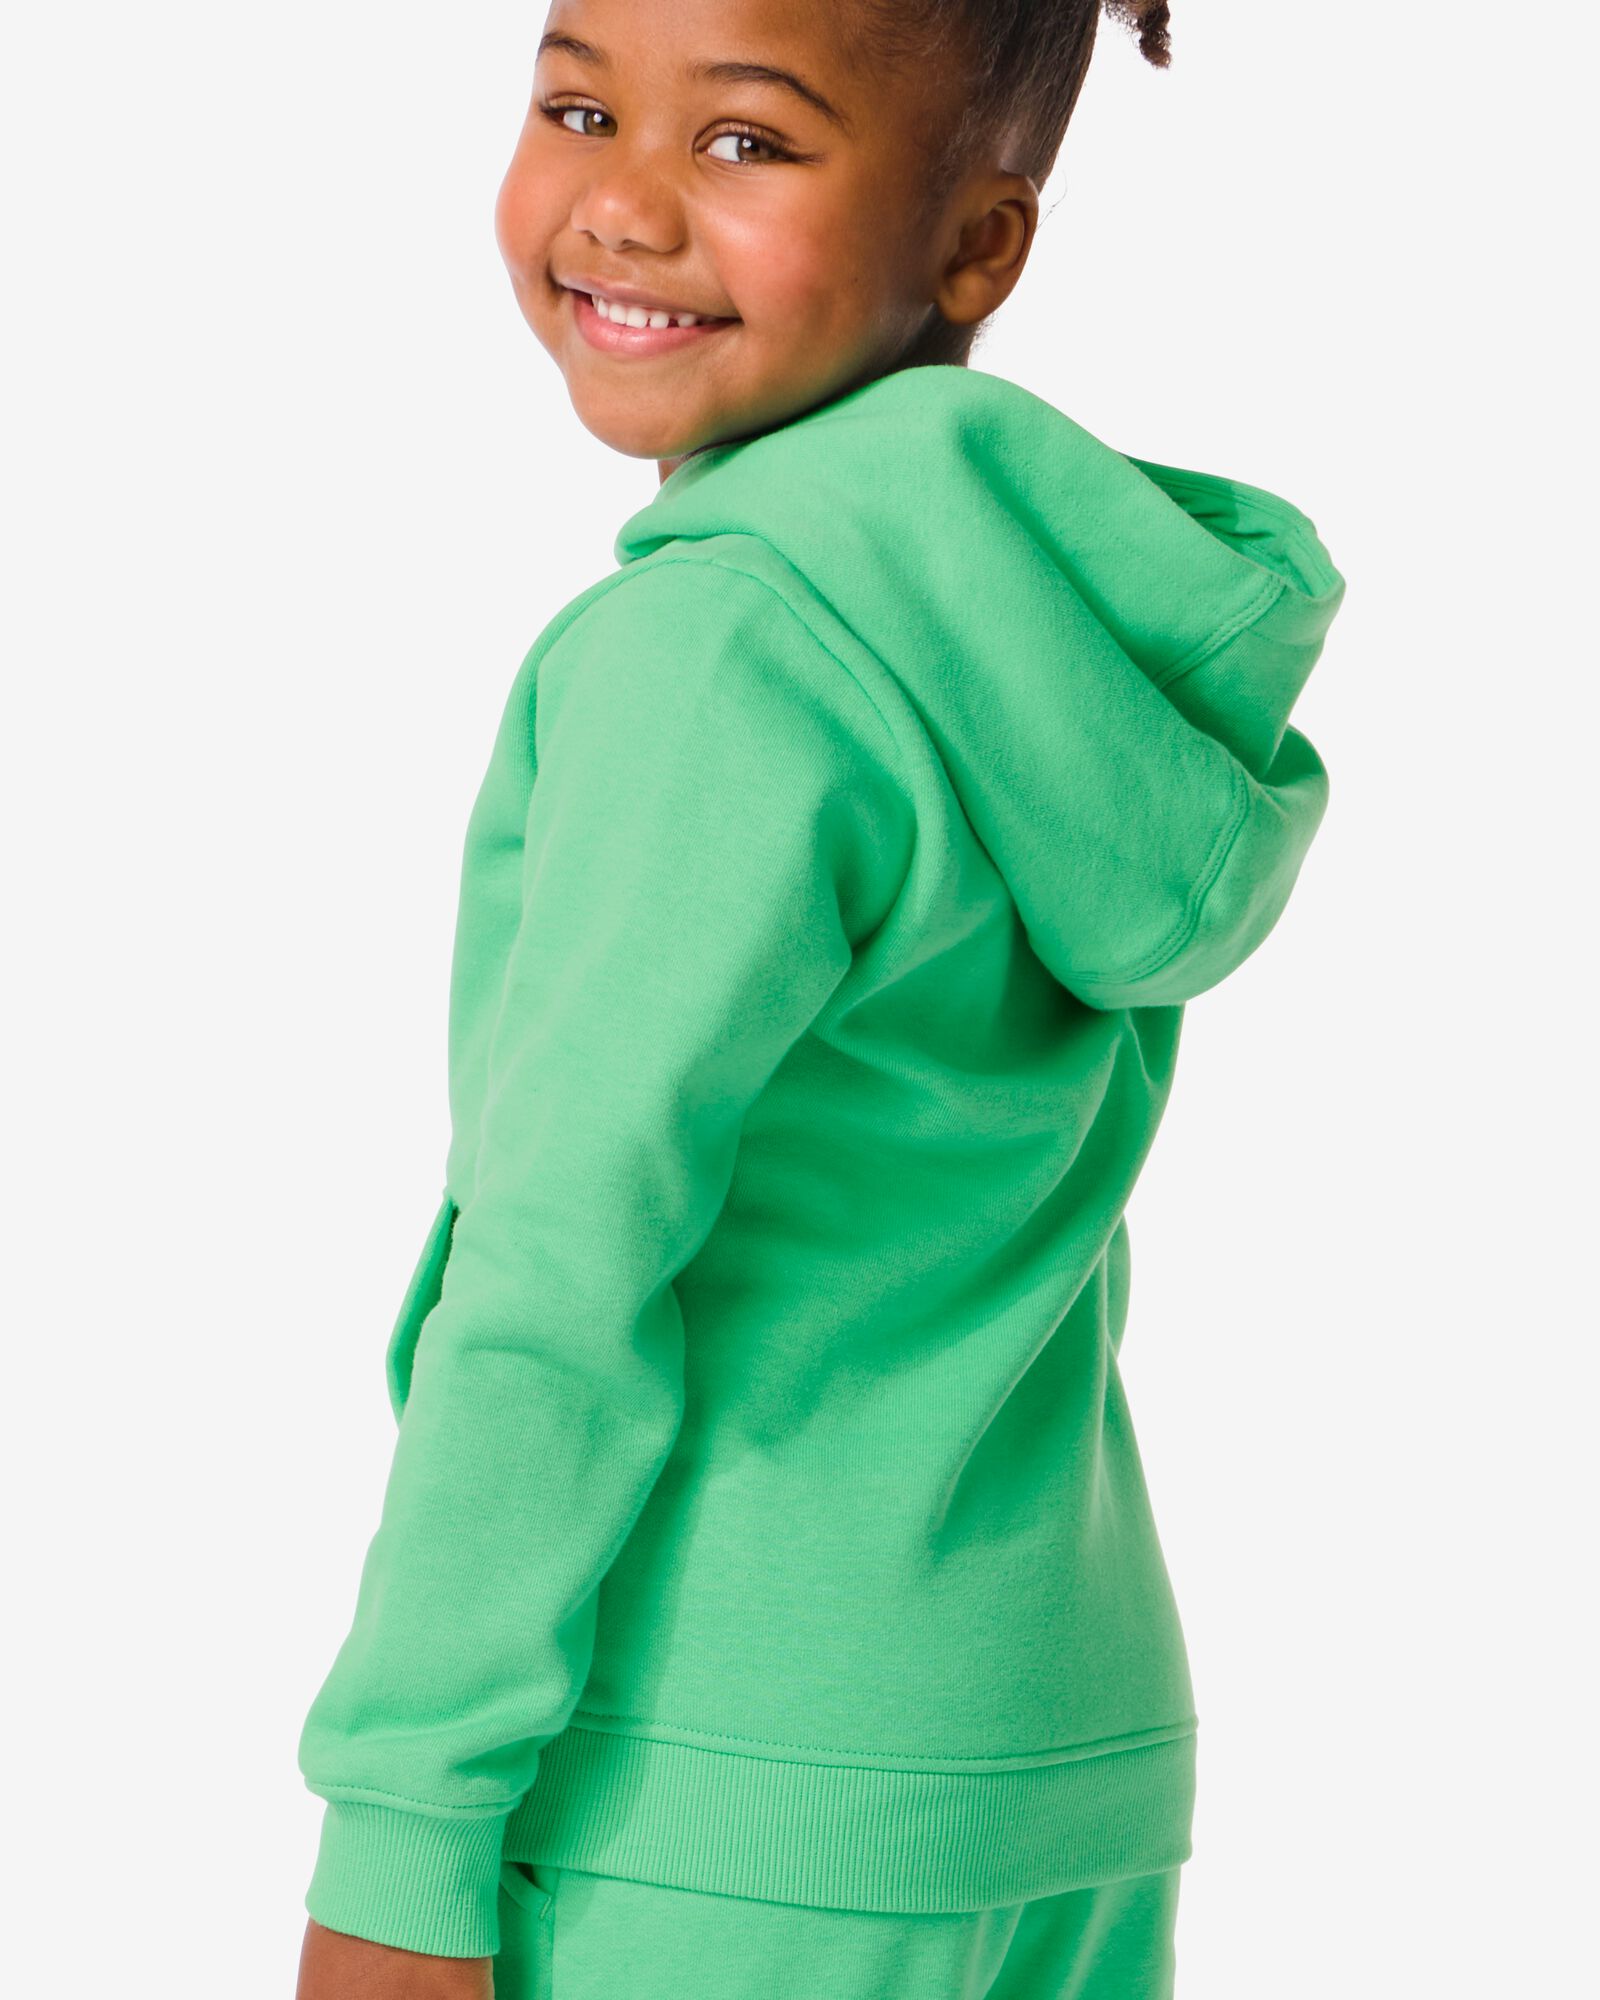 kindersweater met capuchon groen 158/164 - 30777842 - HEMA